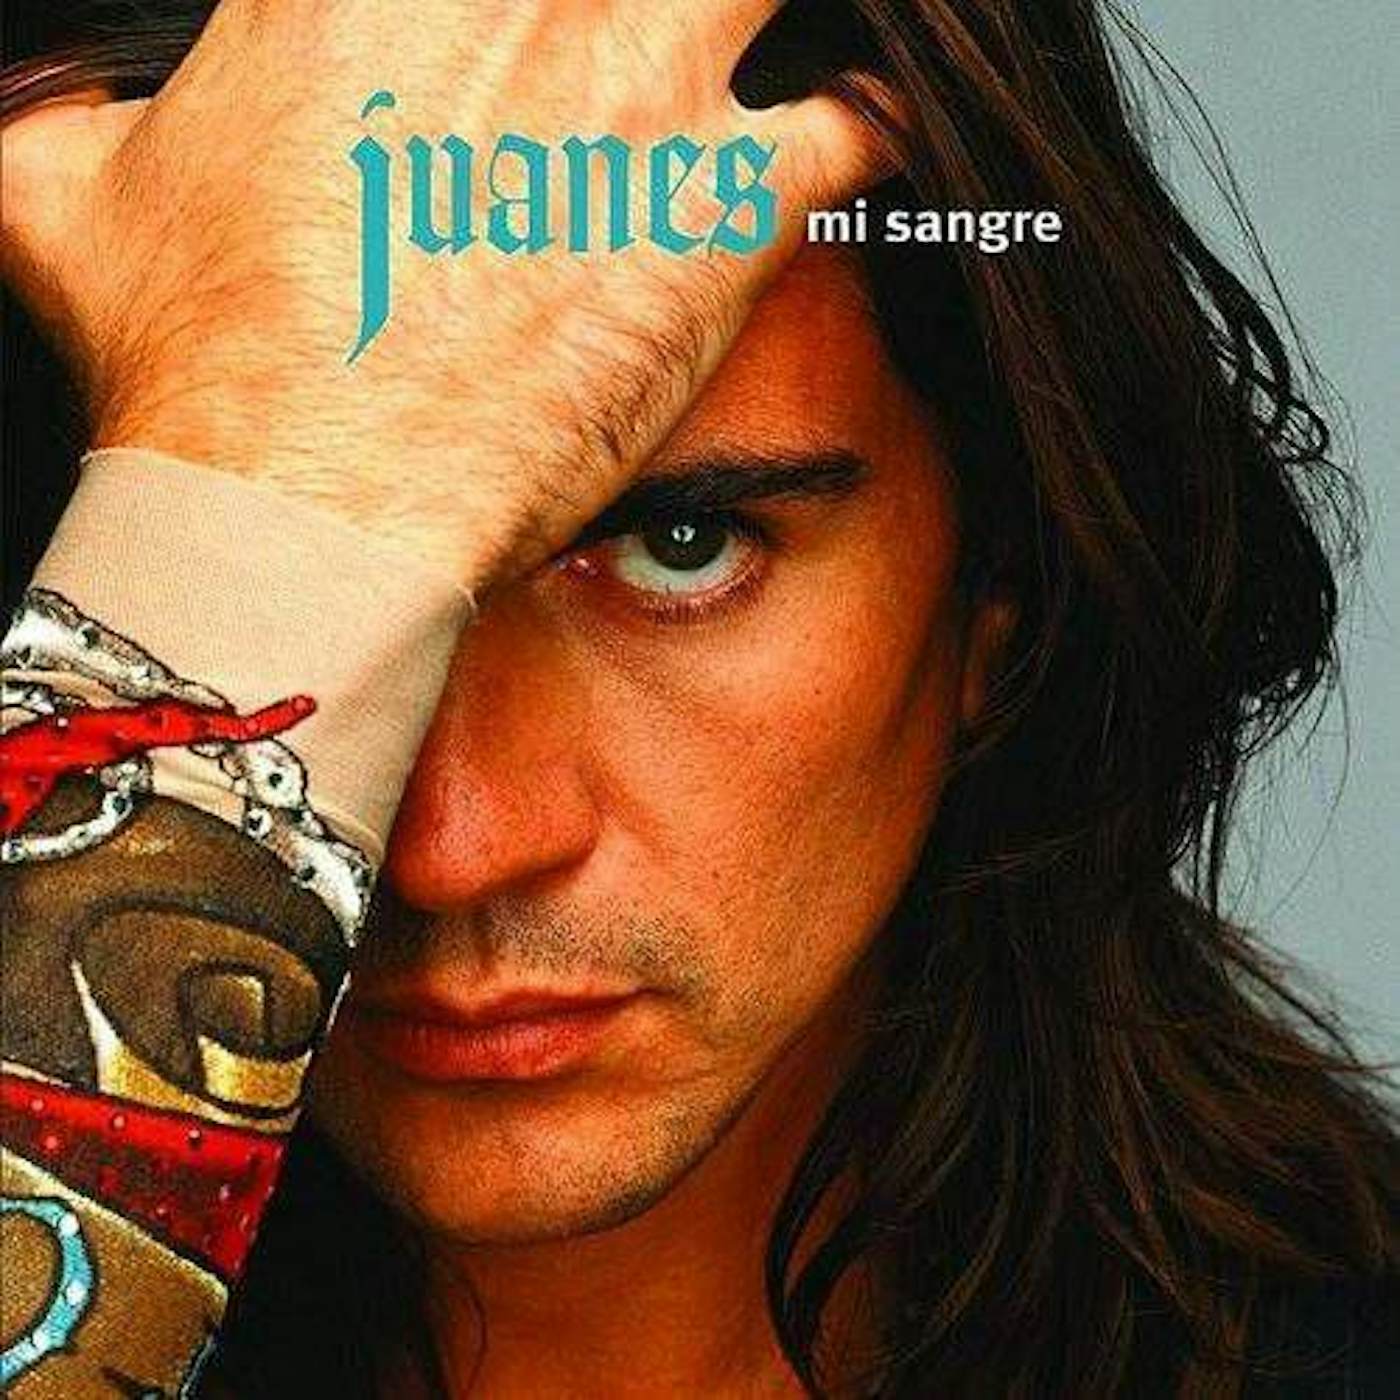 Juanes Mi Sangre Vinyl Record